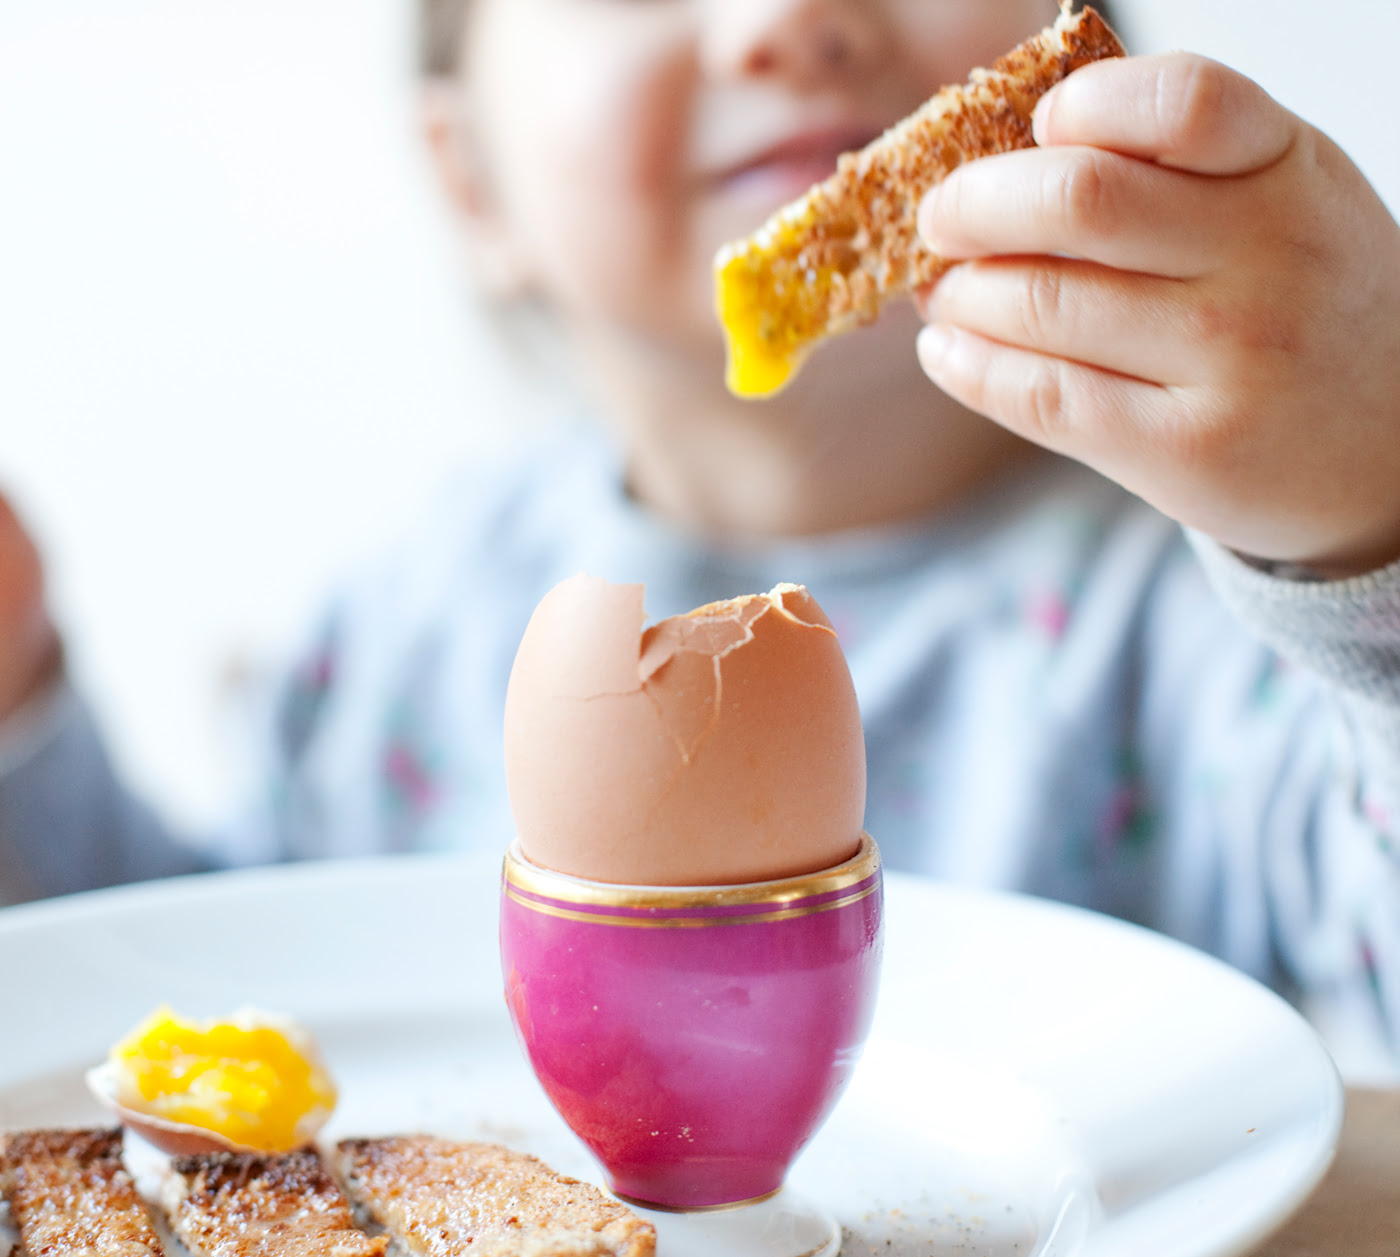 Child dipping food in egg yolk